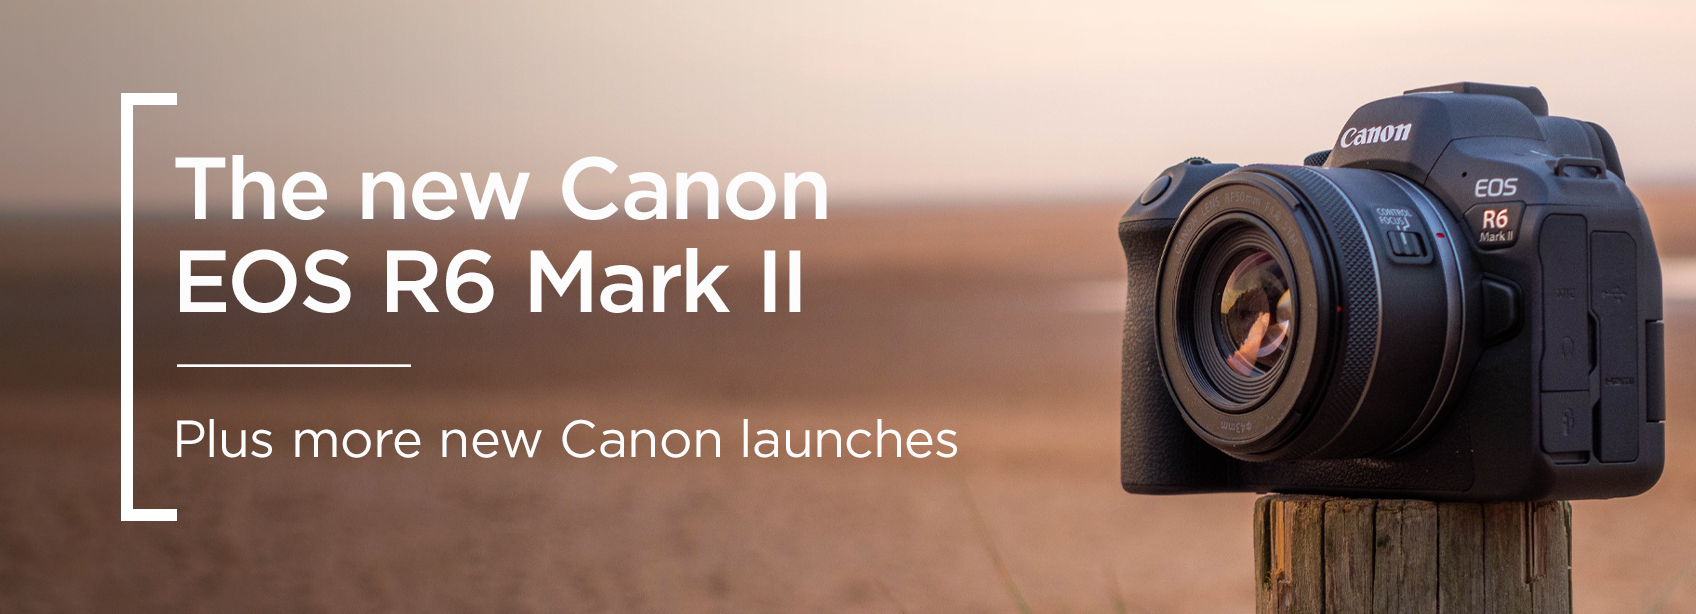 Canon launch